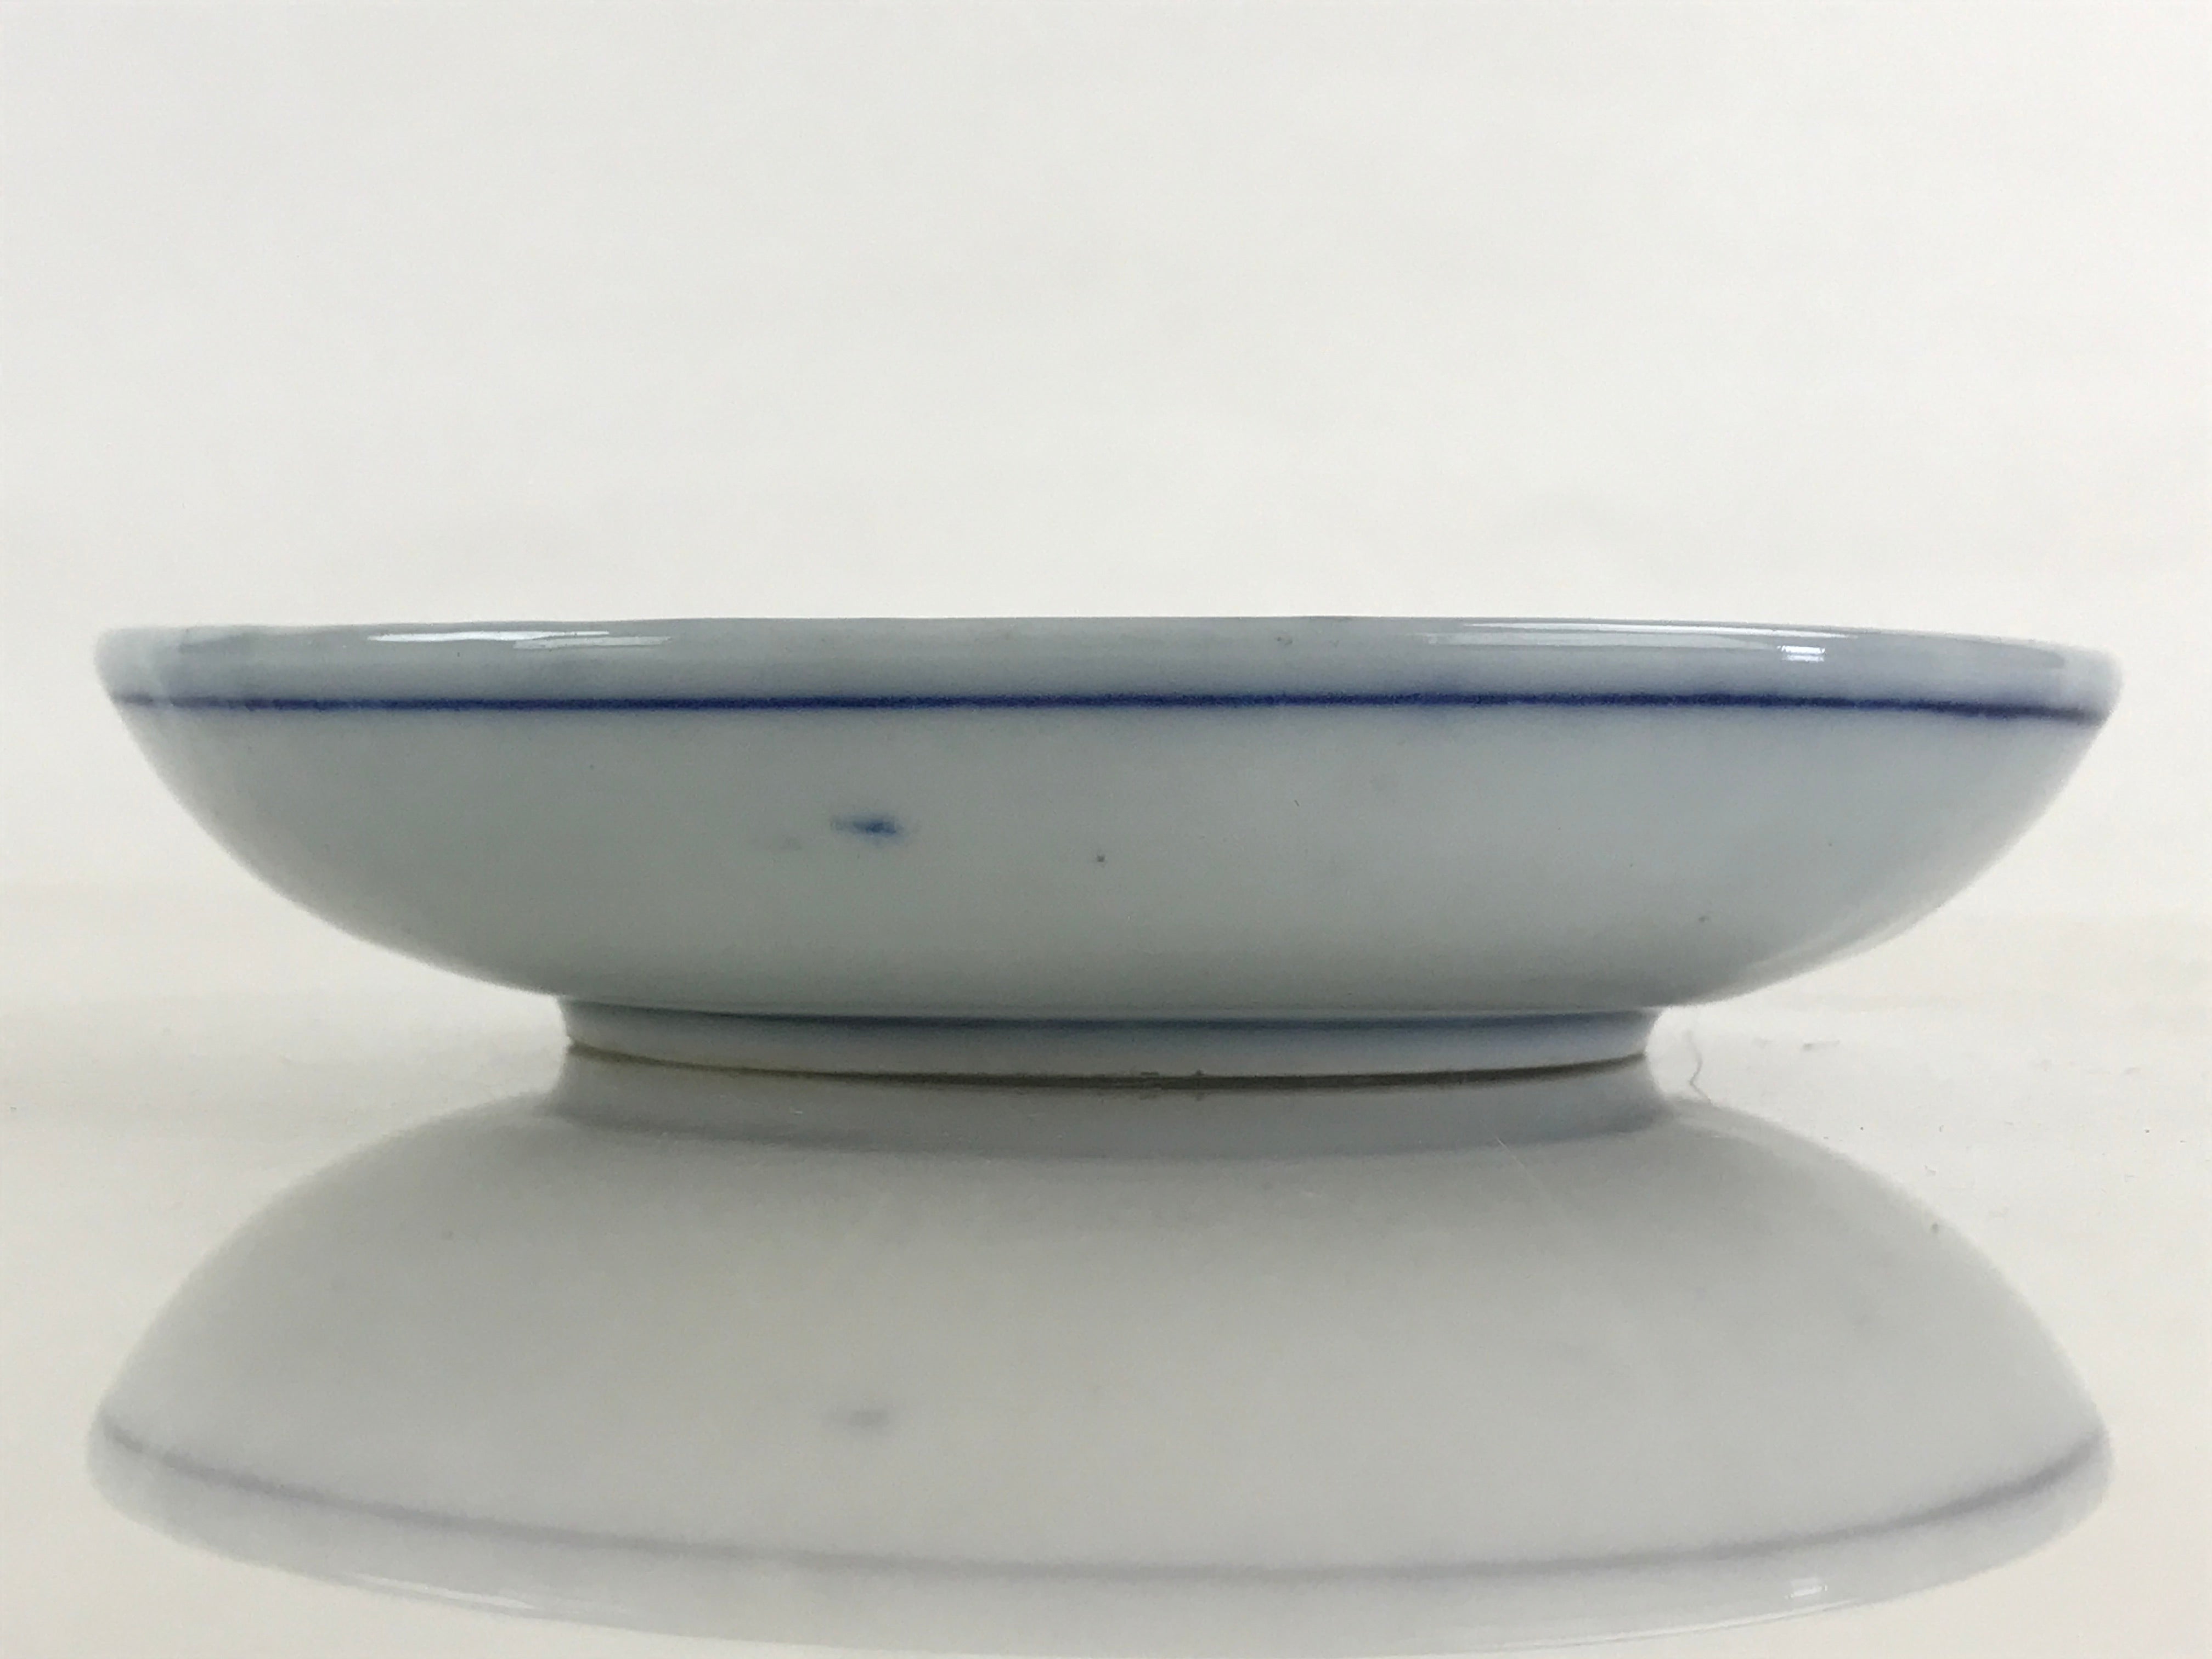 Antique Japanese Porcelain Small Bowl Plate Blue Sometsuke Flower Kozara PY307